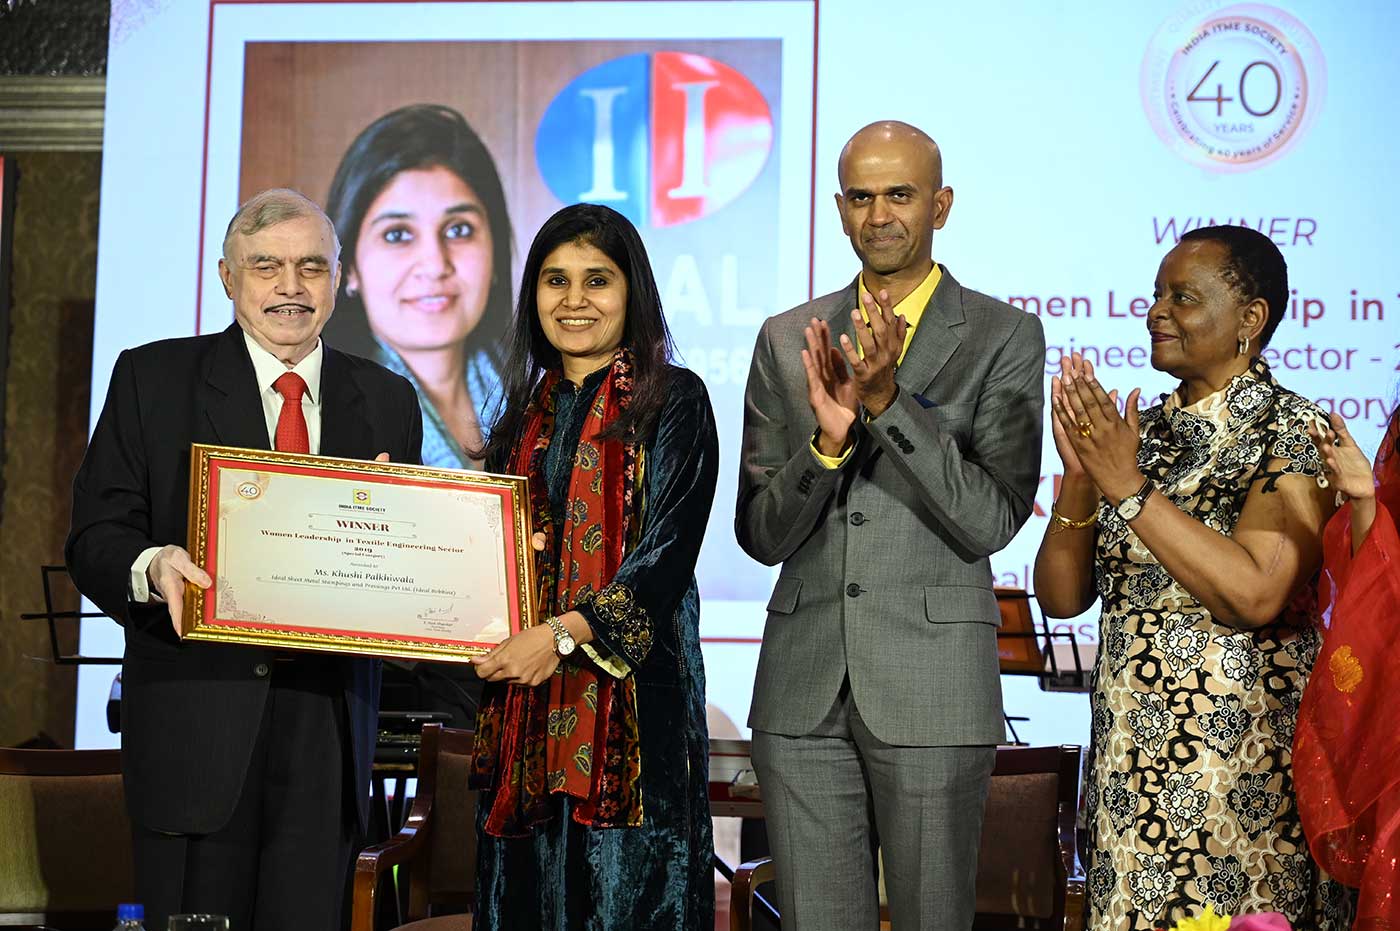 Women Leadership Textile Engineering Sector – Ms. Khushi Palkhiwala, Ideal Group, Ahmedabad, Gujarat received the award